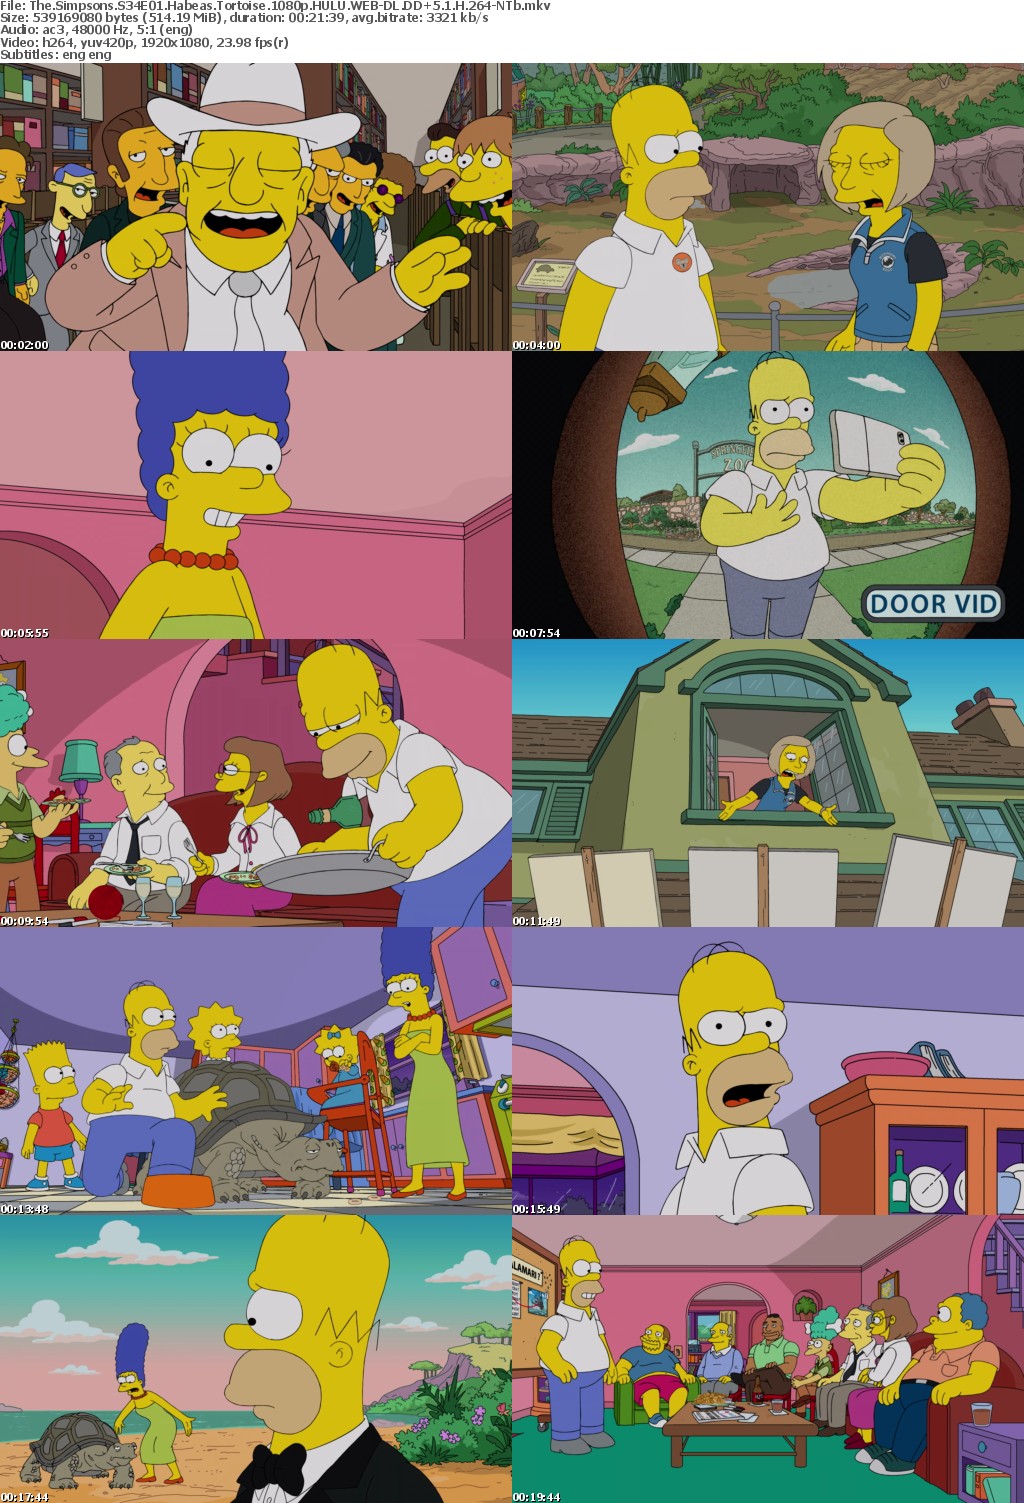 The Simpsons S34E01 Habeas Tortoise 1080p HULU WEBRip DDP5 1 x264-NTb